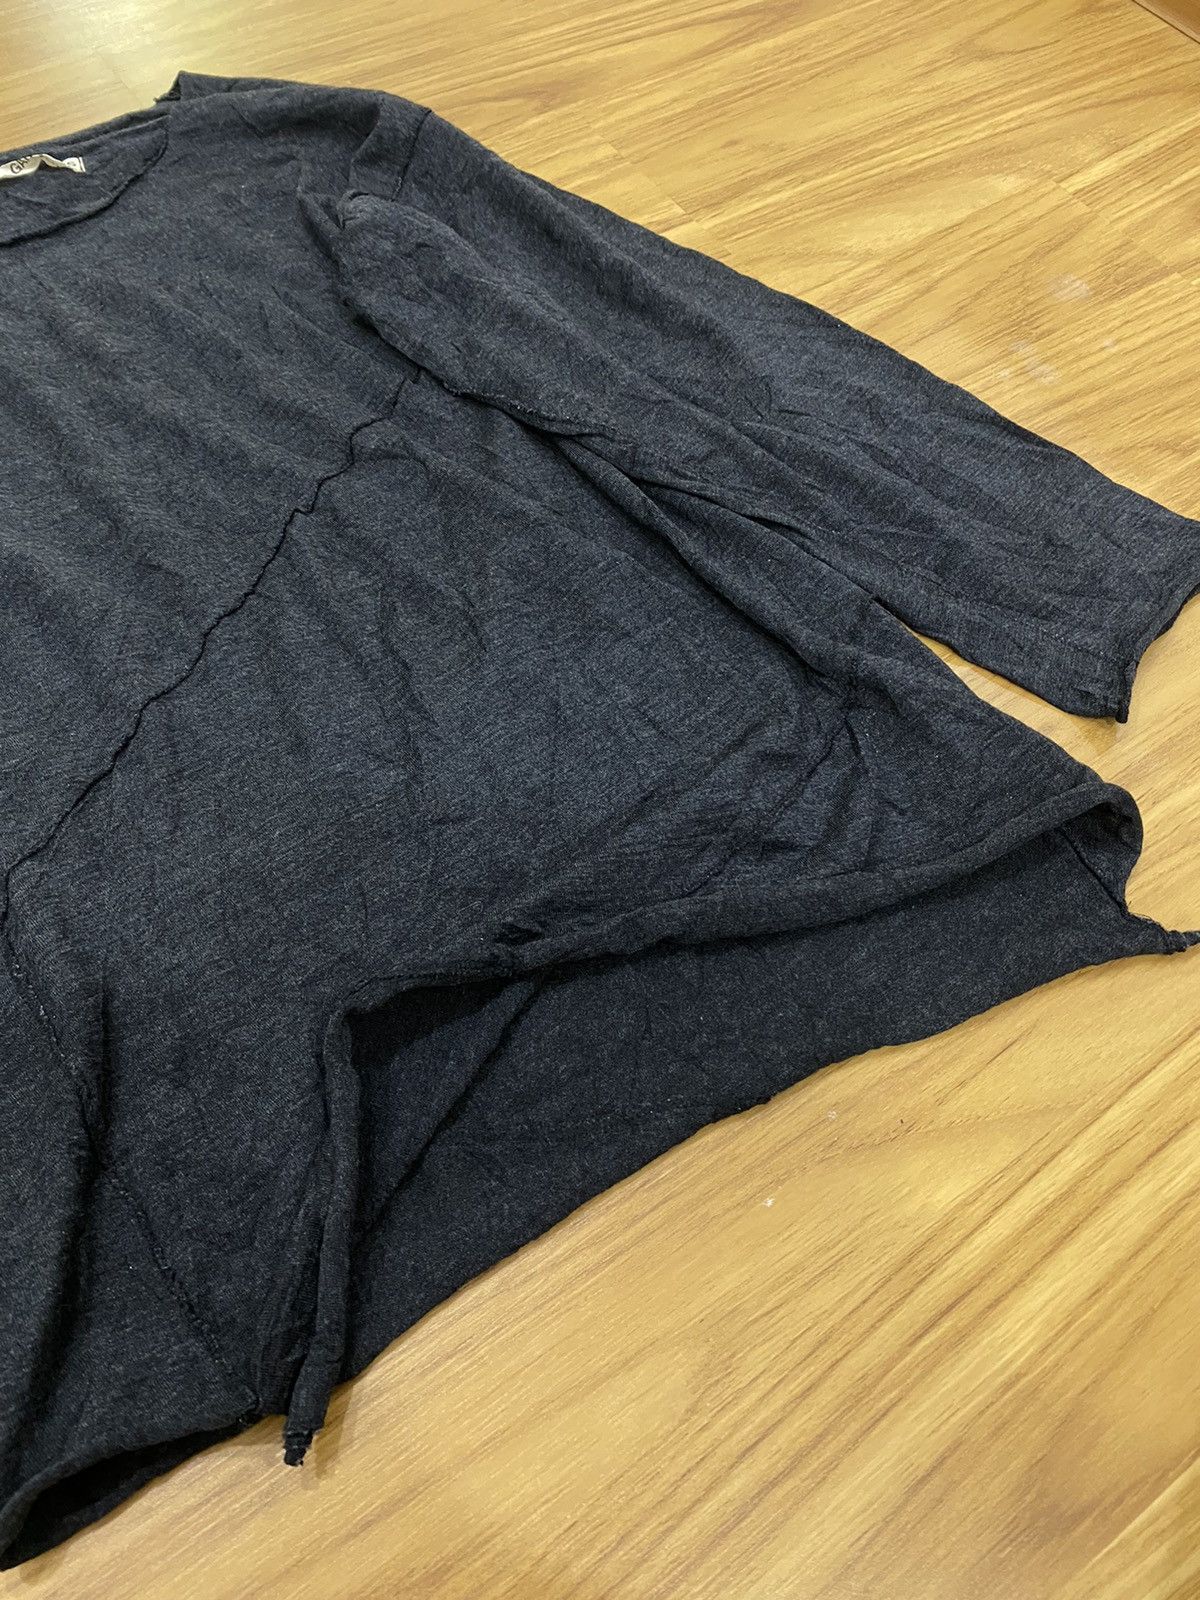 AW91 Rei Kawakubo Cut And Sew Wool Sample L/S Shirt - 3